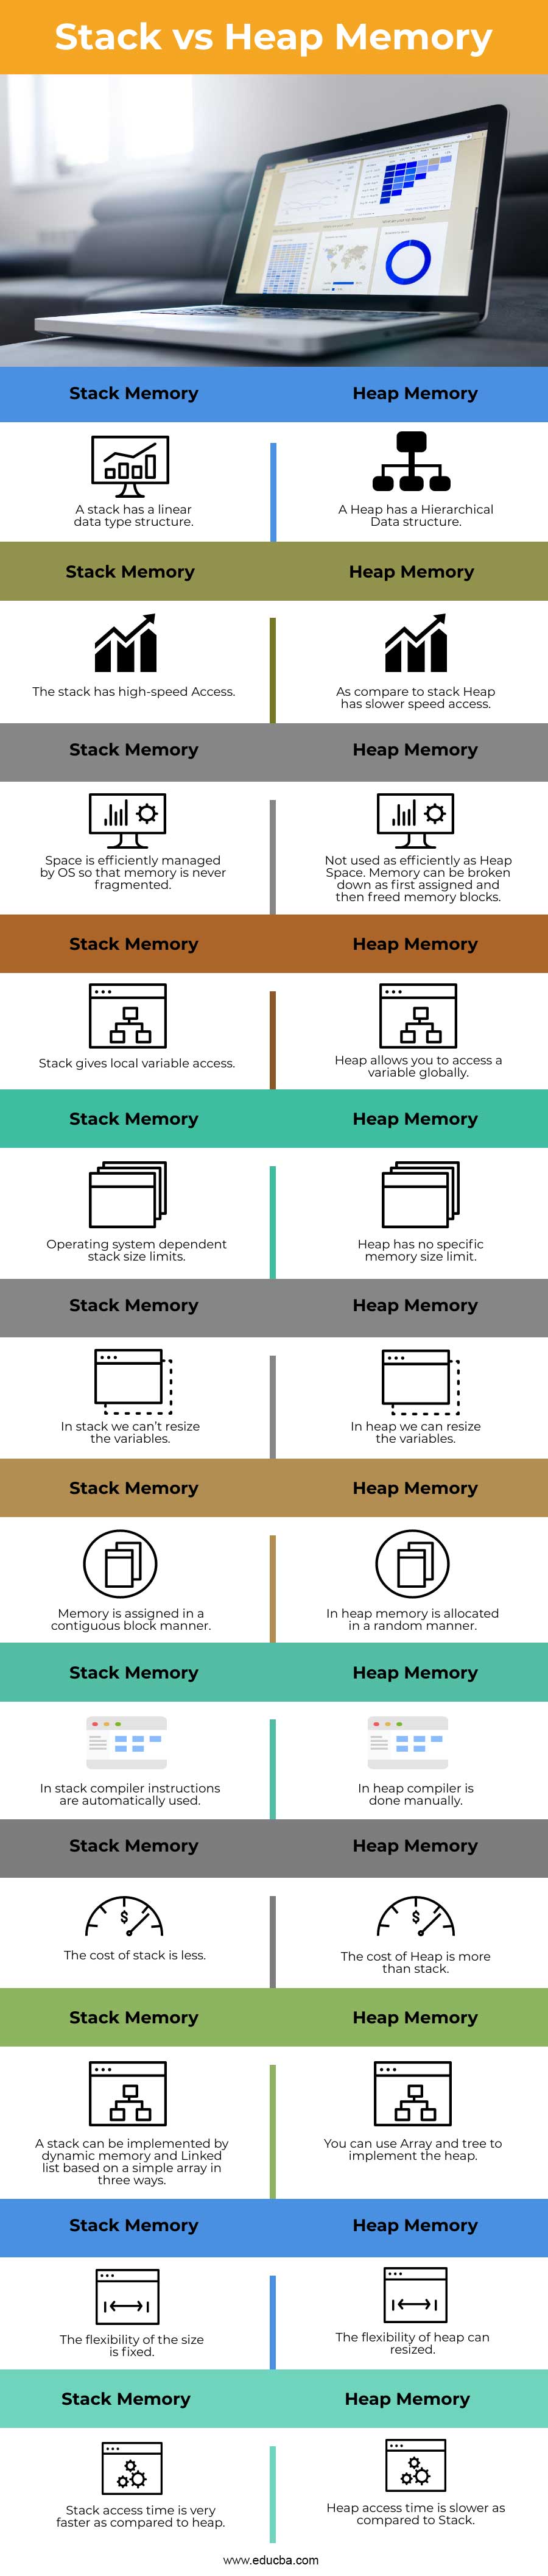 Stack-vs-Heap-Memory-info